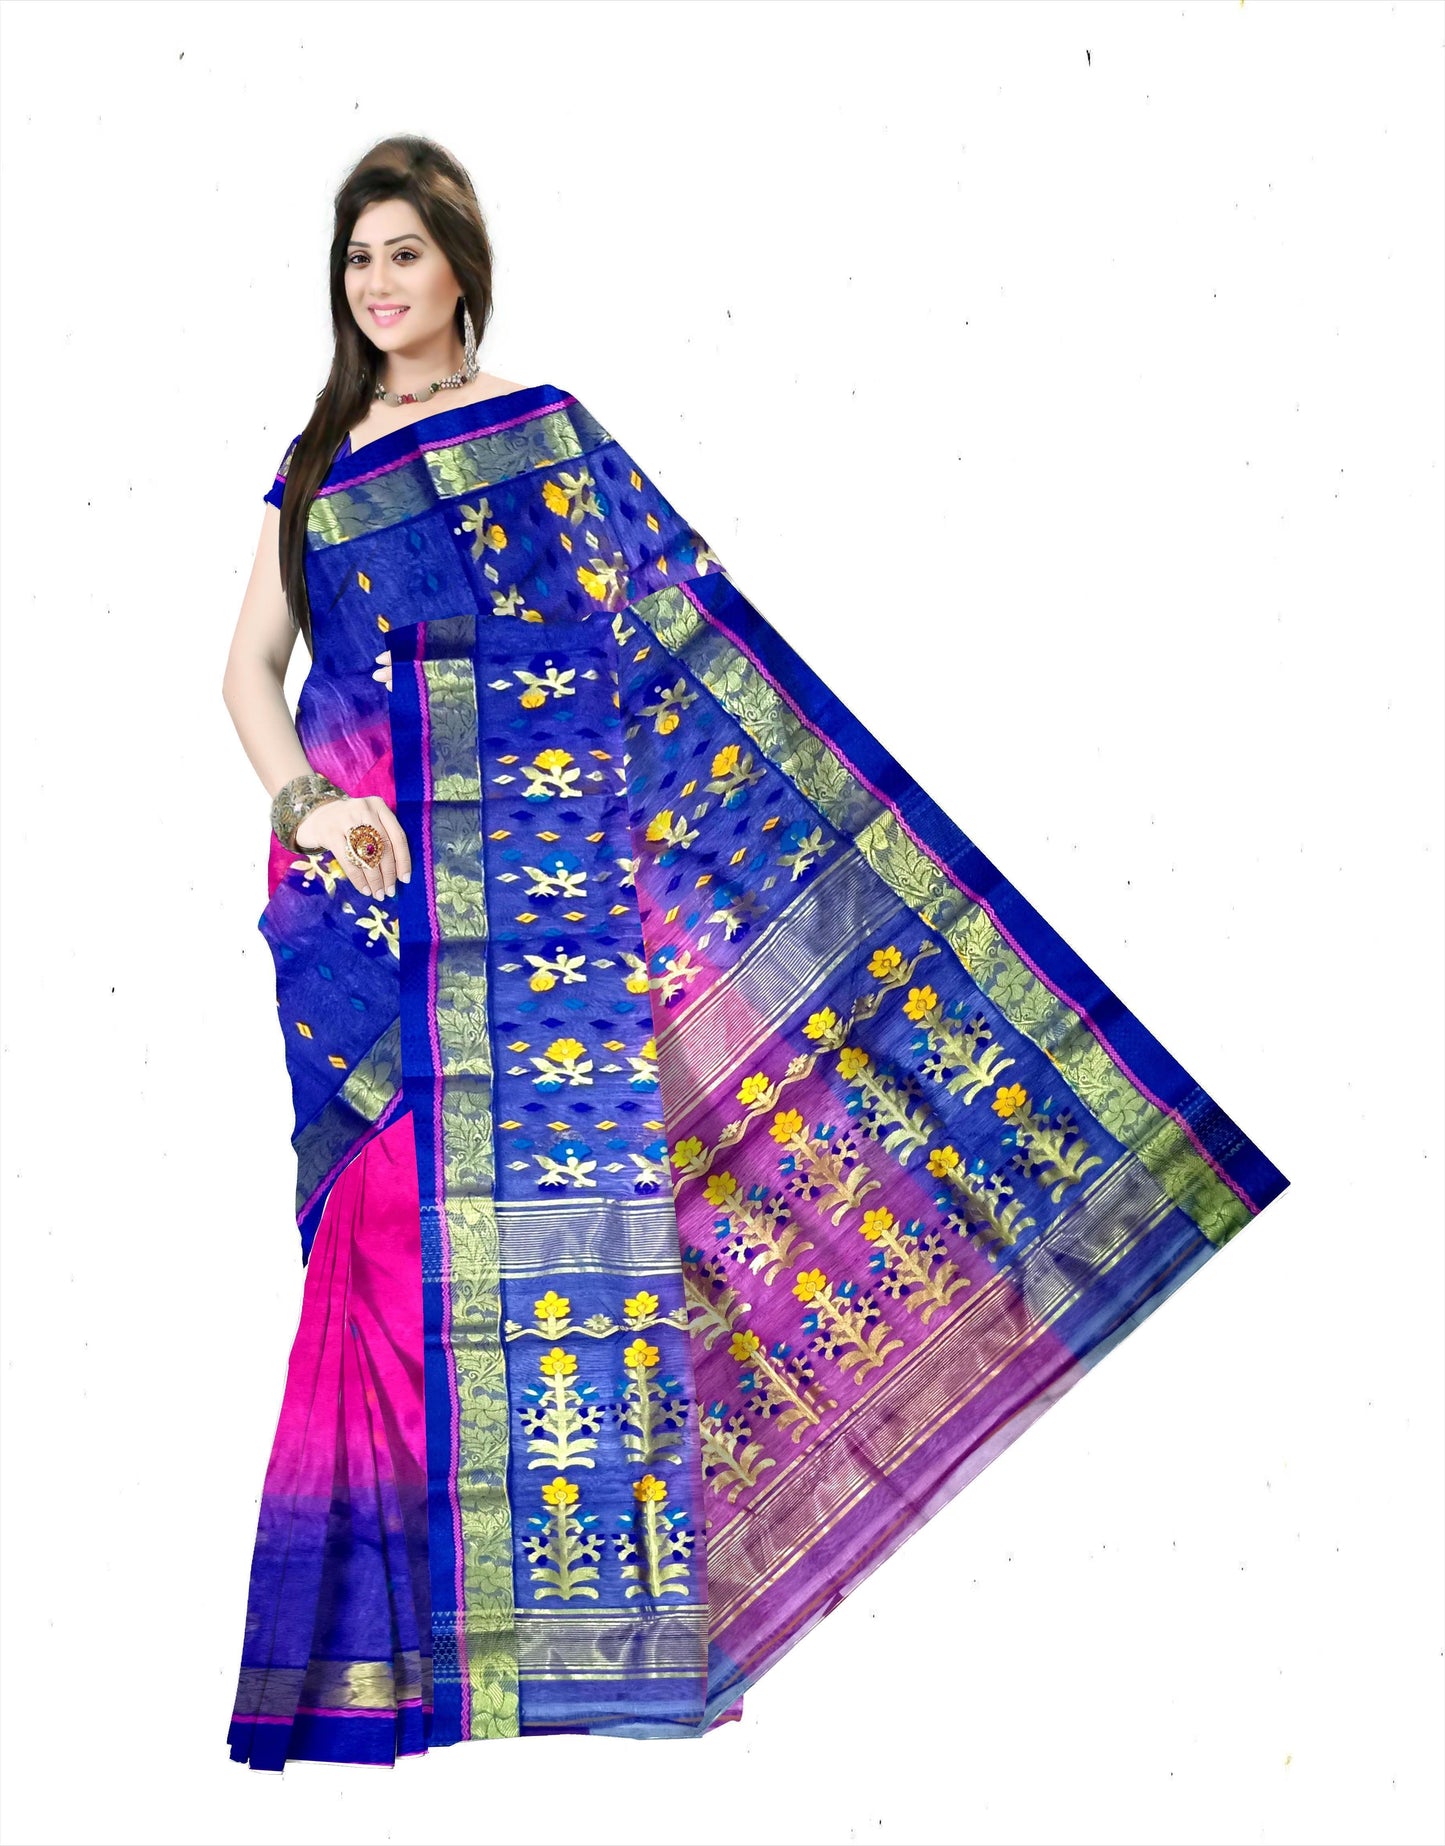 Pradip Fabrics Ethnic Women's Tant Silk Blue and Pink Color Saree